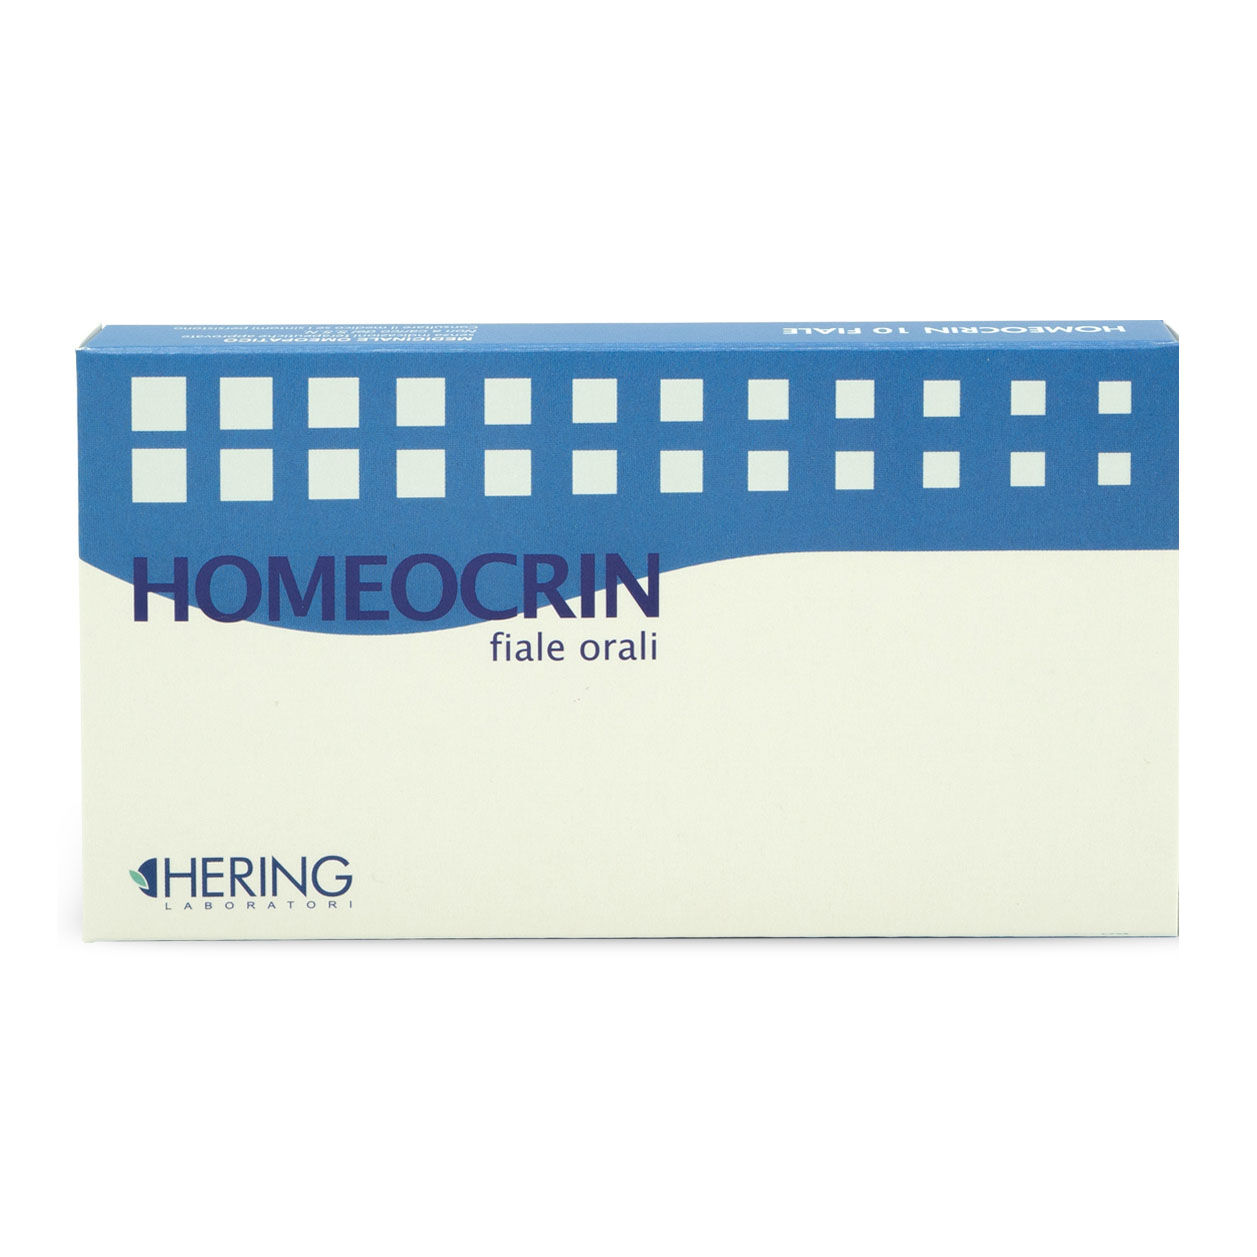 hering Homeoflex homecrin 7 10fl 2ml